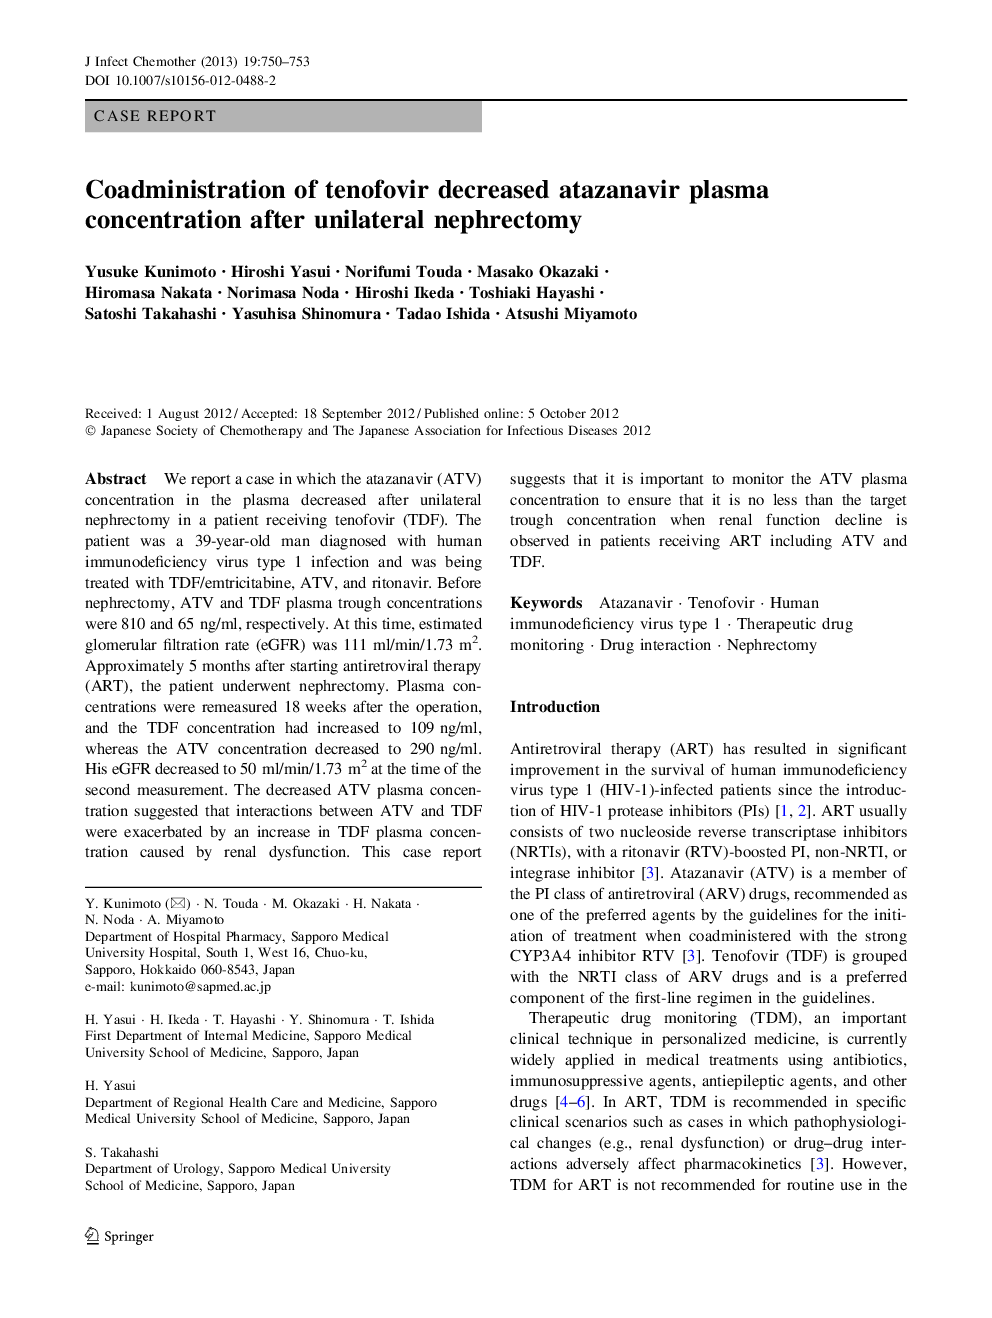 Coadministration of tenofovir decreased atazanavir plasma concentration after unilateral nephrectomy